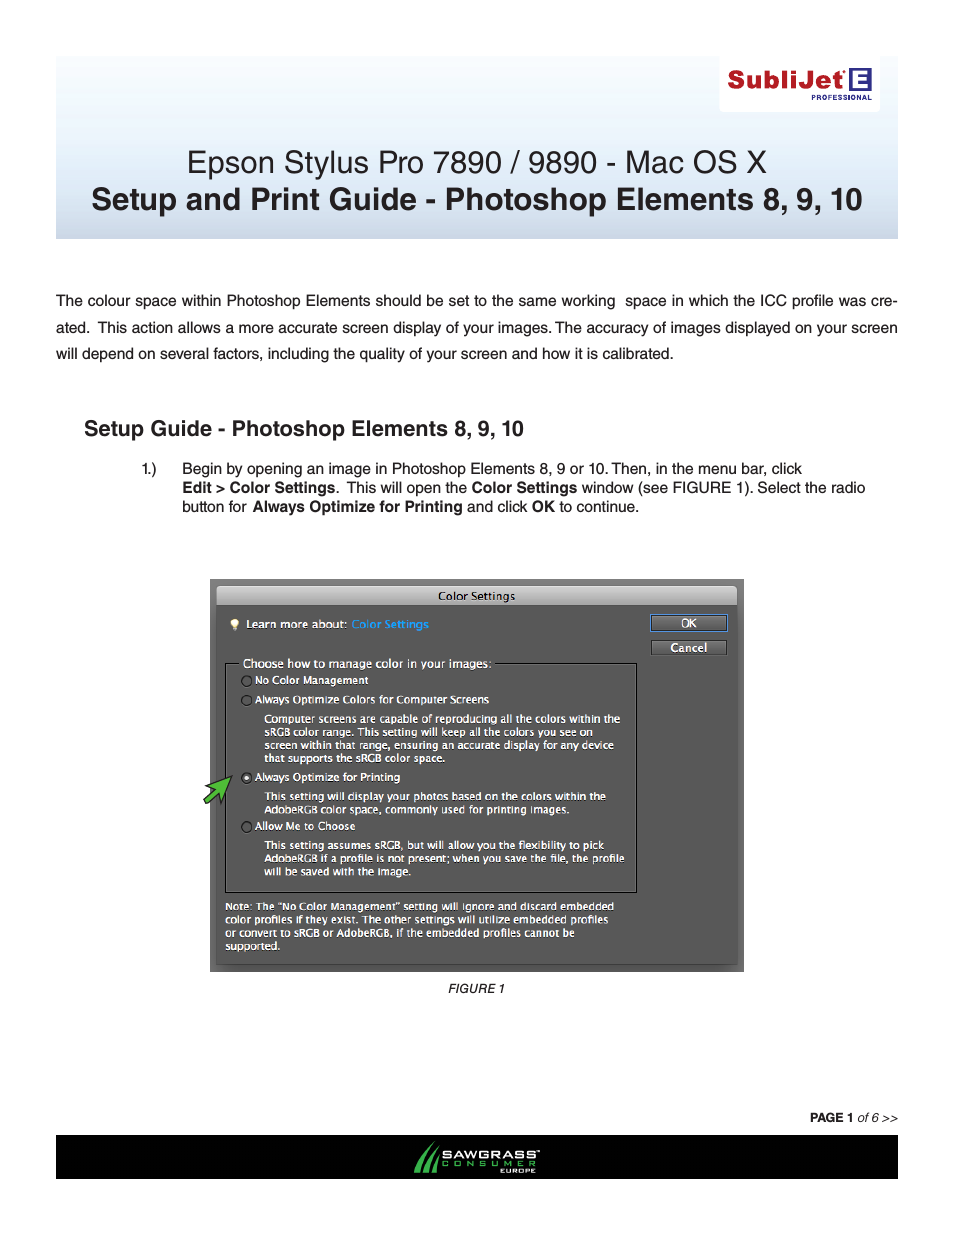 SubliJet E Epson Stylus Pro 7890 (Mac ICC Profile Setup): Print & Setup Guide Photoshop Elements 8 - 10